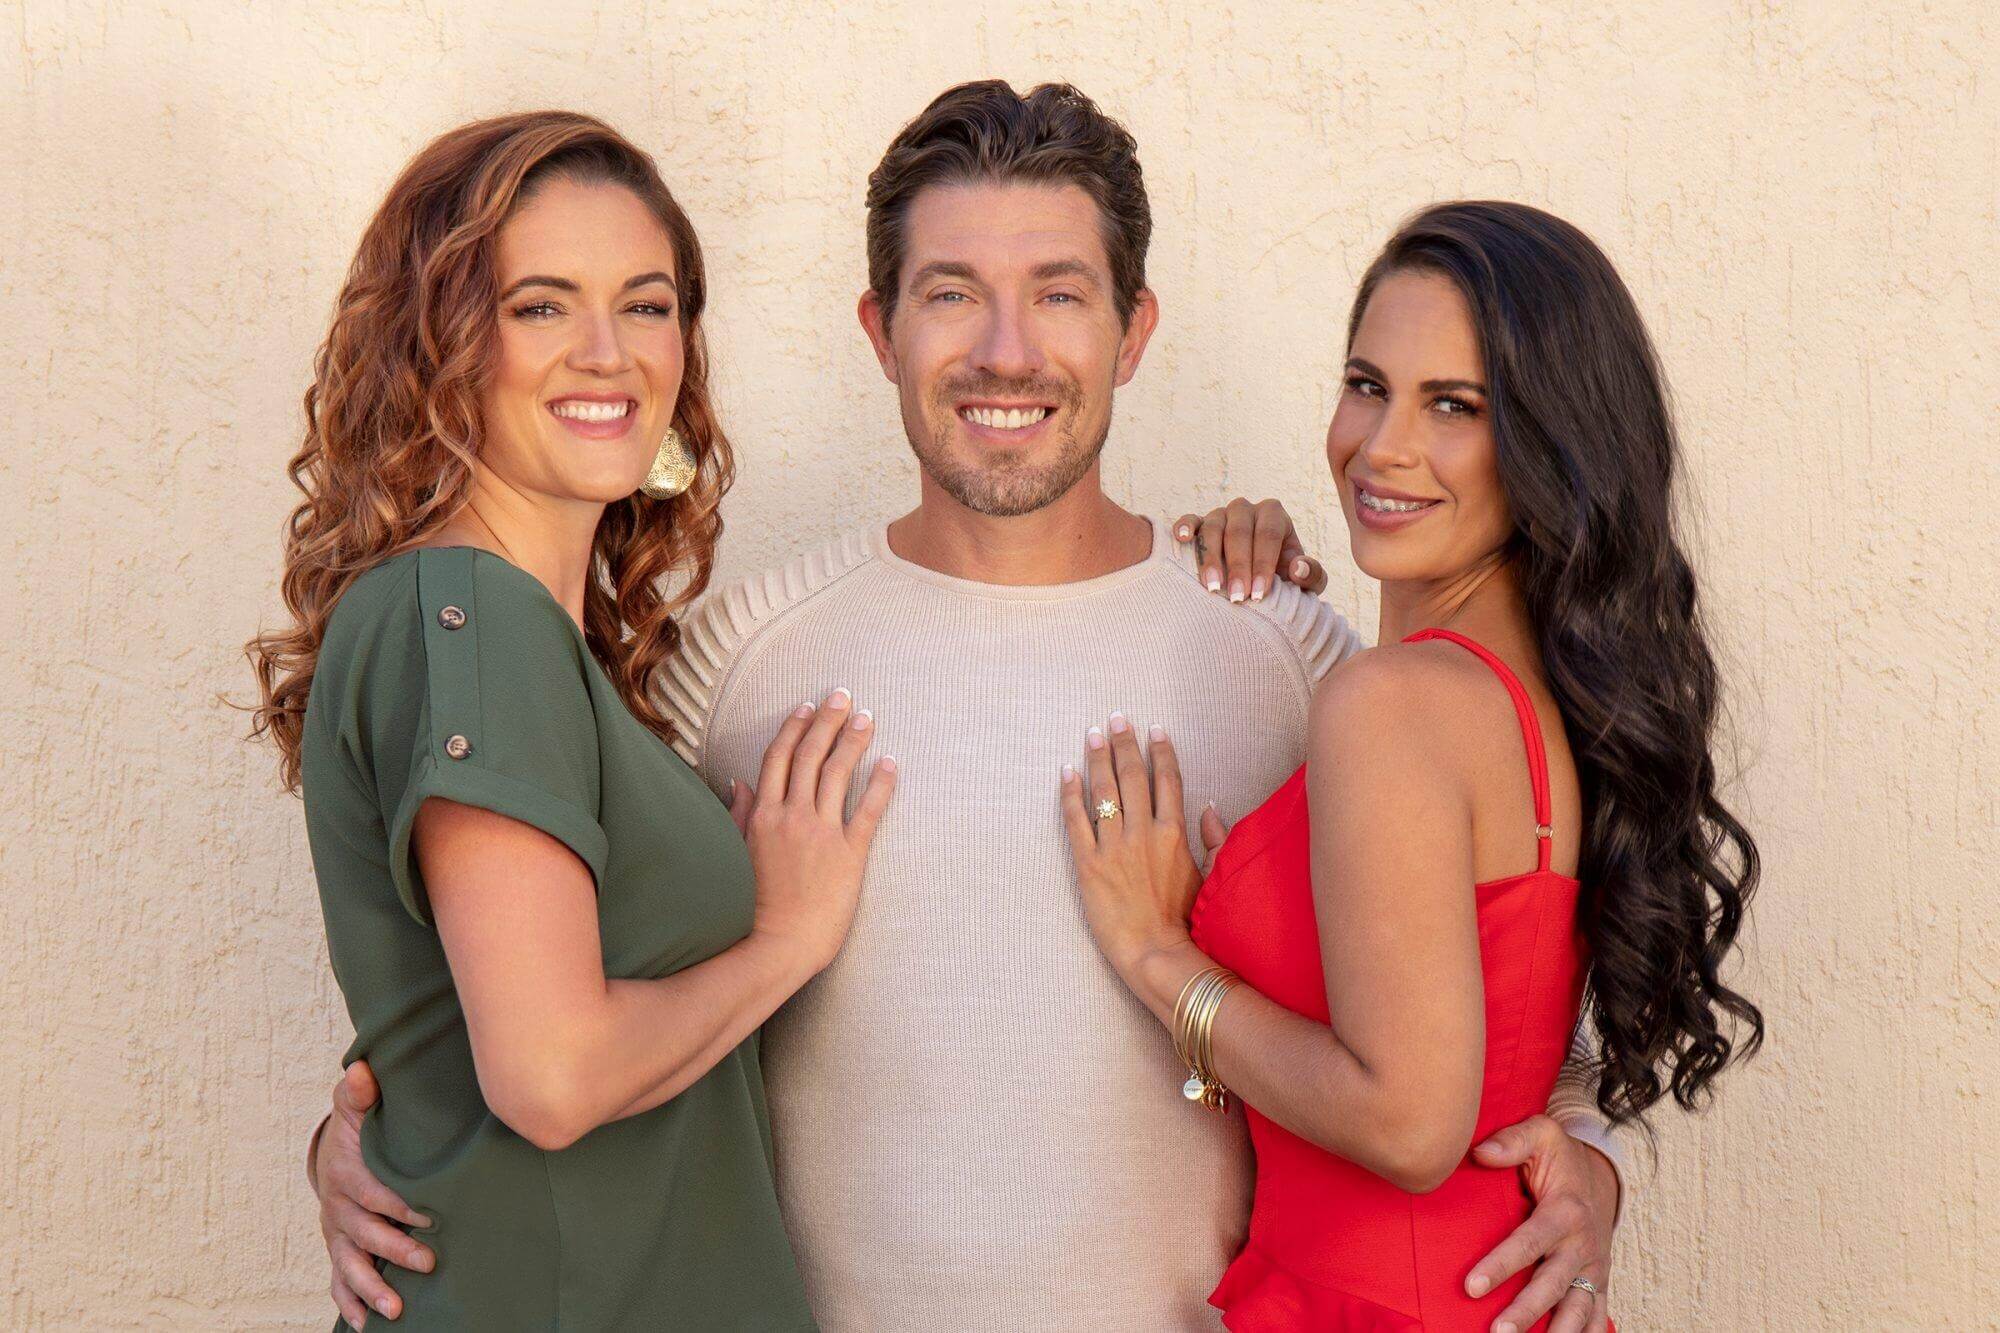 Dannielle Merrifield, Garrick Merrifield, and Roberta Pache pose together for promo for ‘Seeking Sister Wife'.